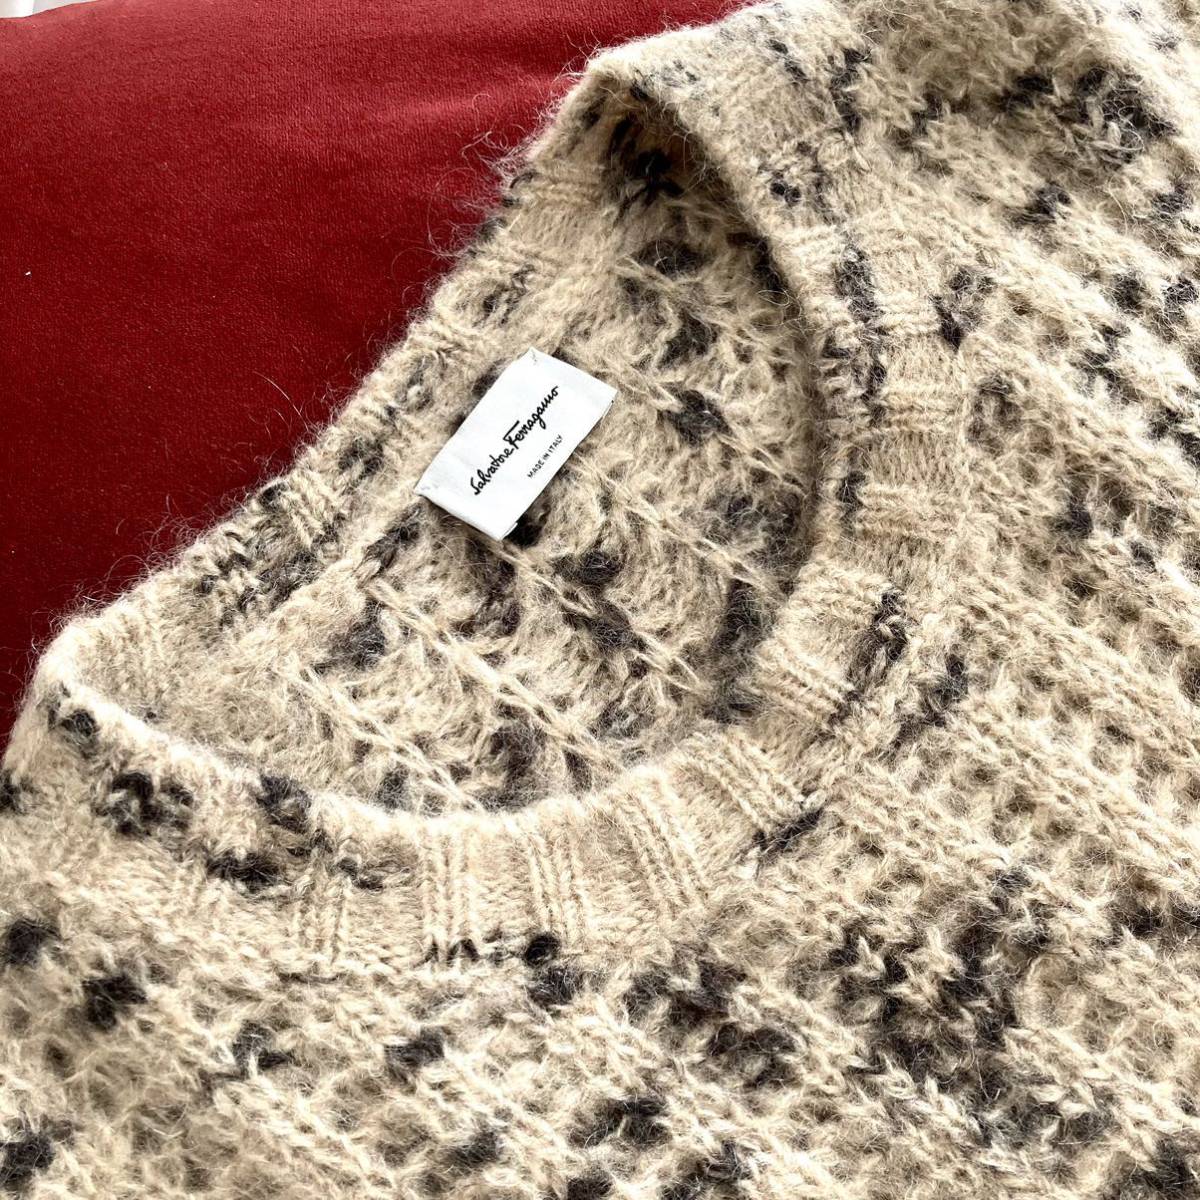 2021.22 Pre Fall#Salvatore Ferragamo/ Ferragamo knitted * sweater mohair_ Ran way * domestic regular beautiful goods *mo hair / gun chi-niXL